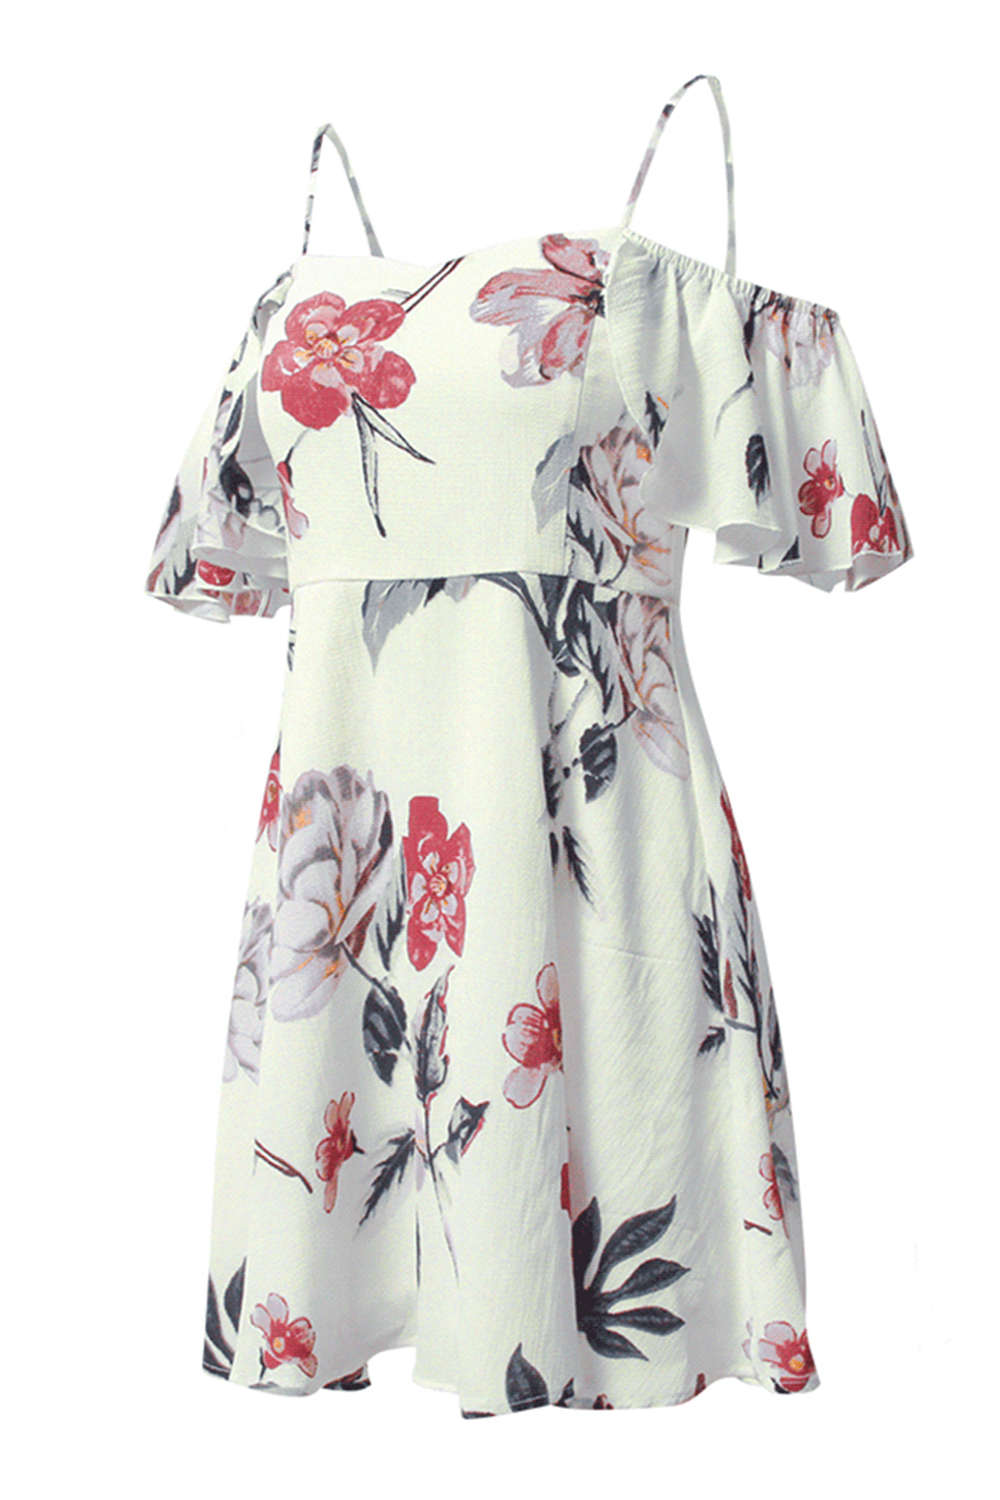 Iyasson Women Ruffle Floral Print Off- shoulder Holiday Beach Dress